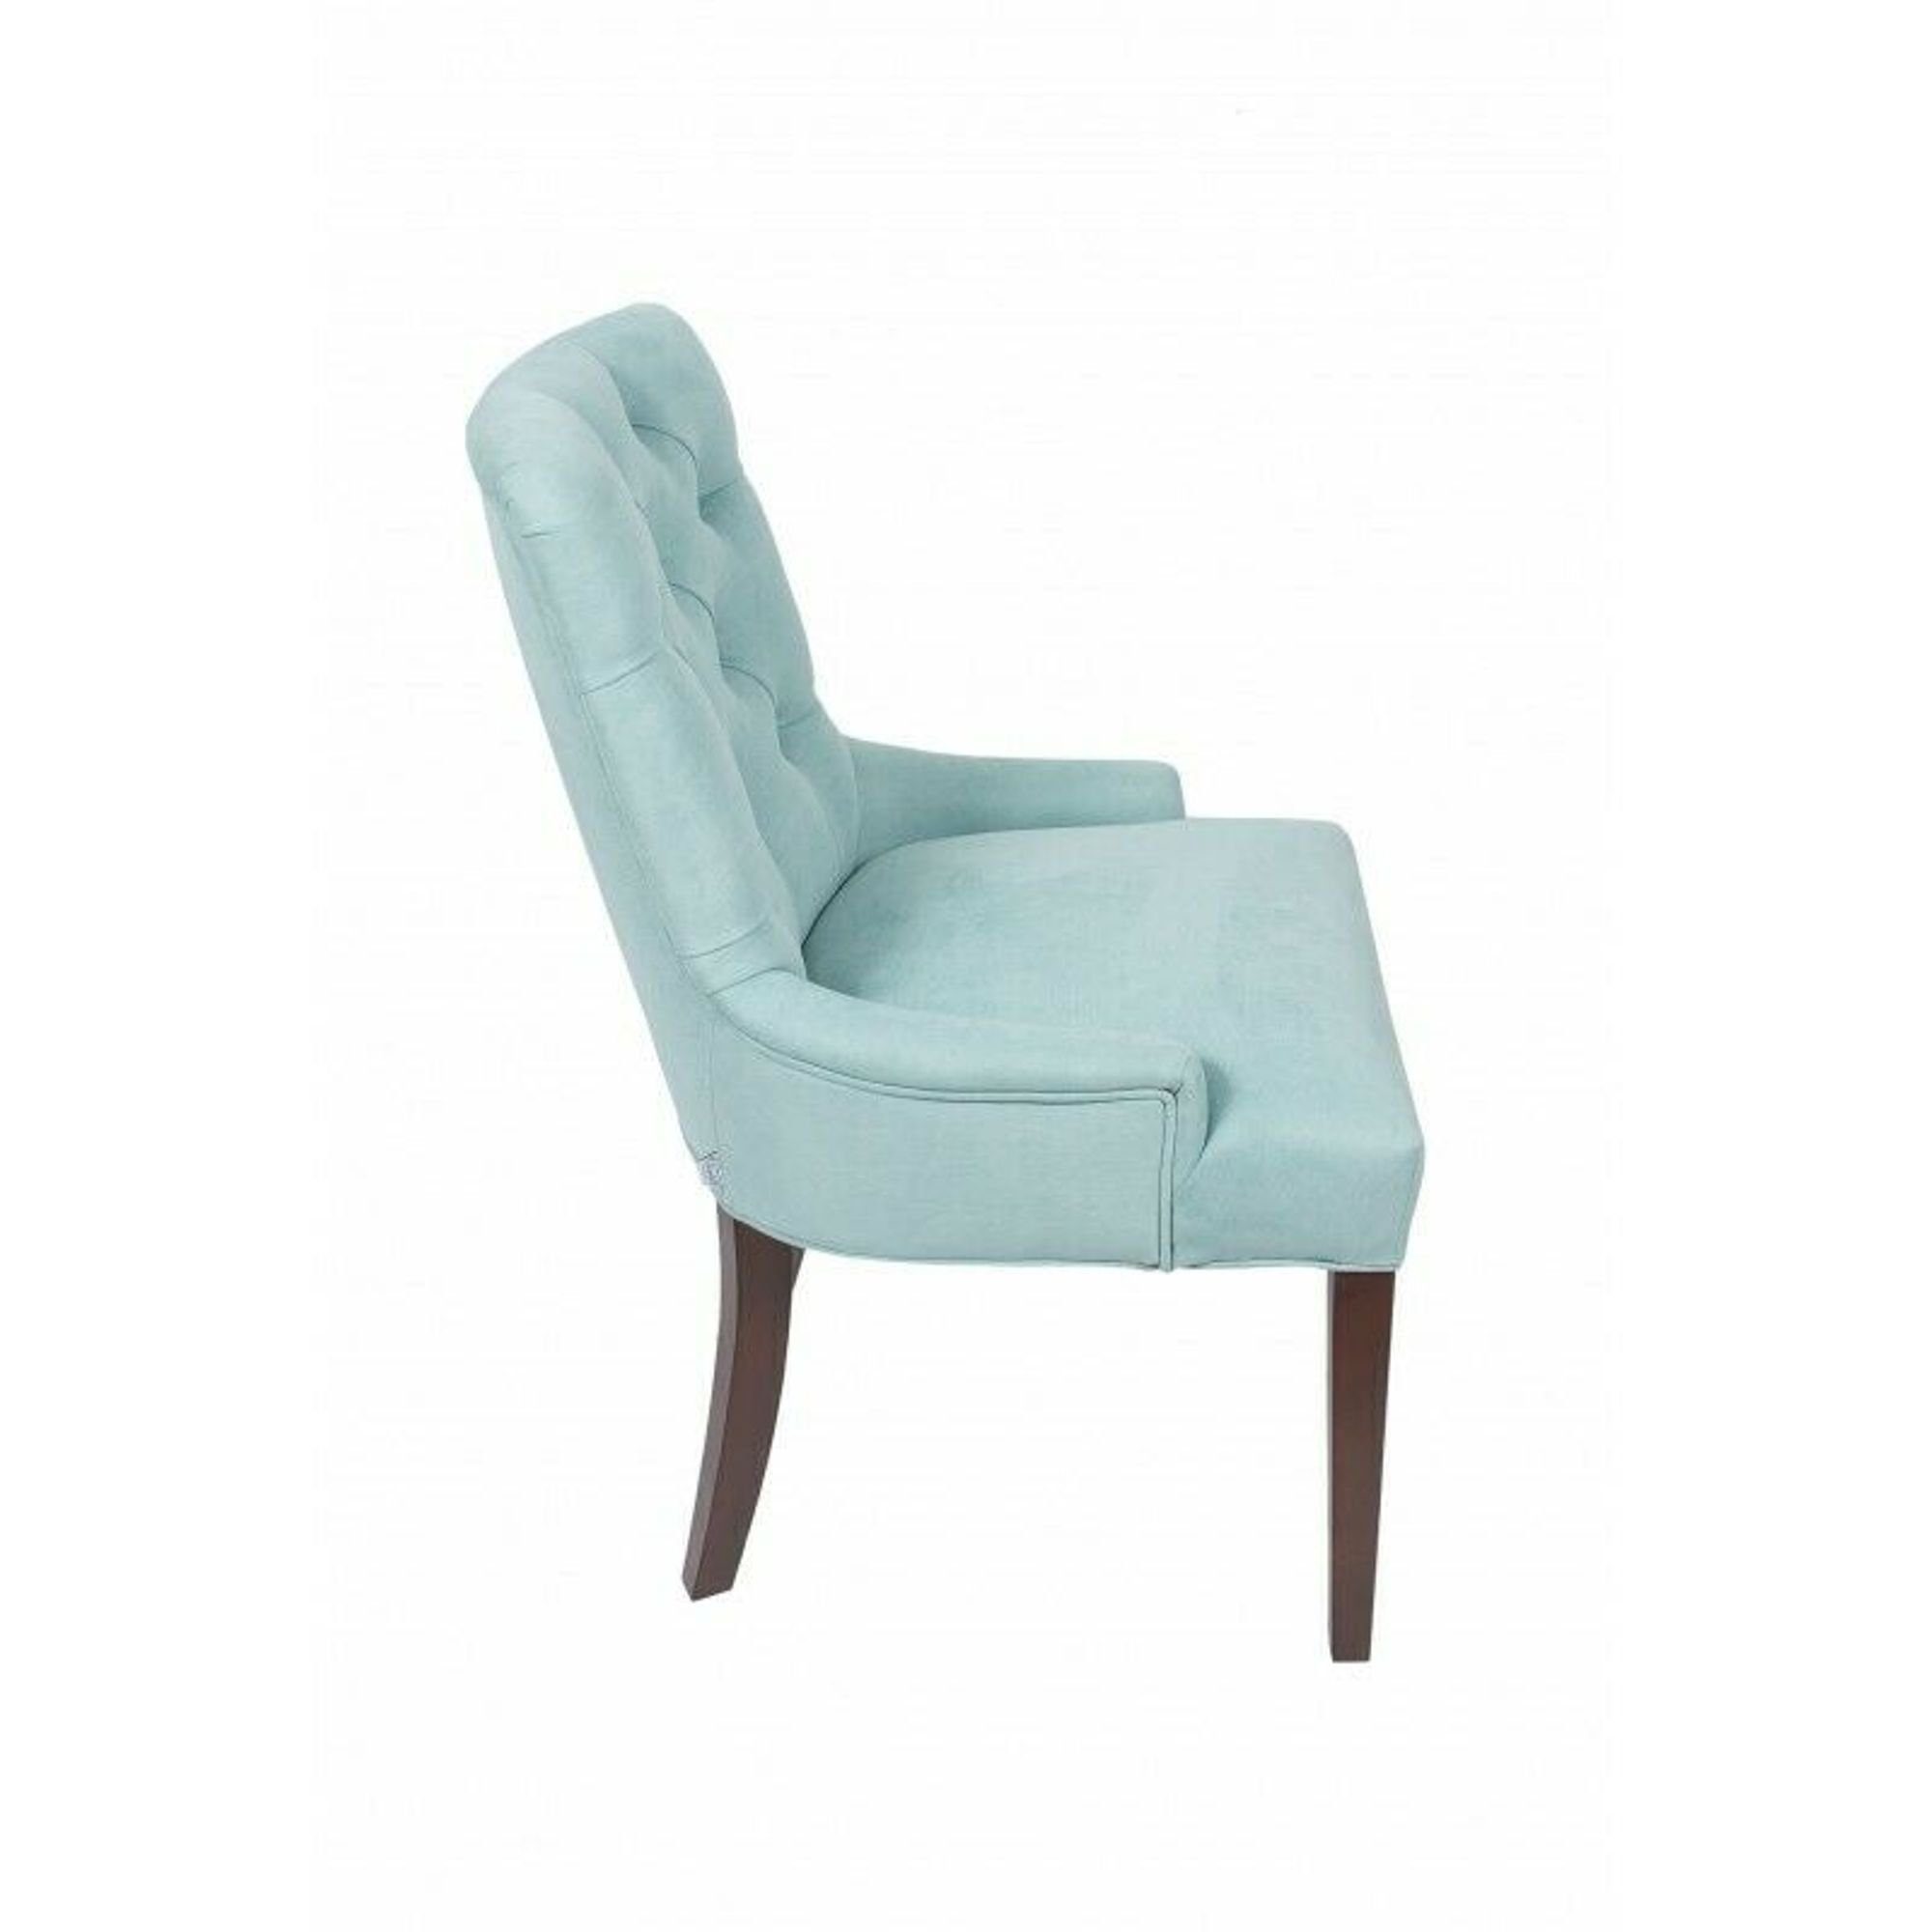 Textil Gruppe Chesterfield Hotel Stühle Garnitur Stuhl 8xSet Blau Stuhl, JVmoebel Design Neu Polster